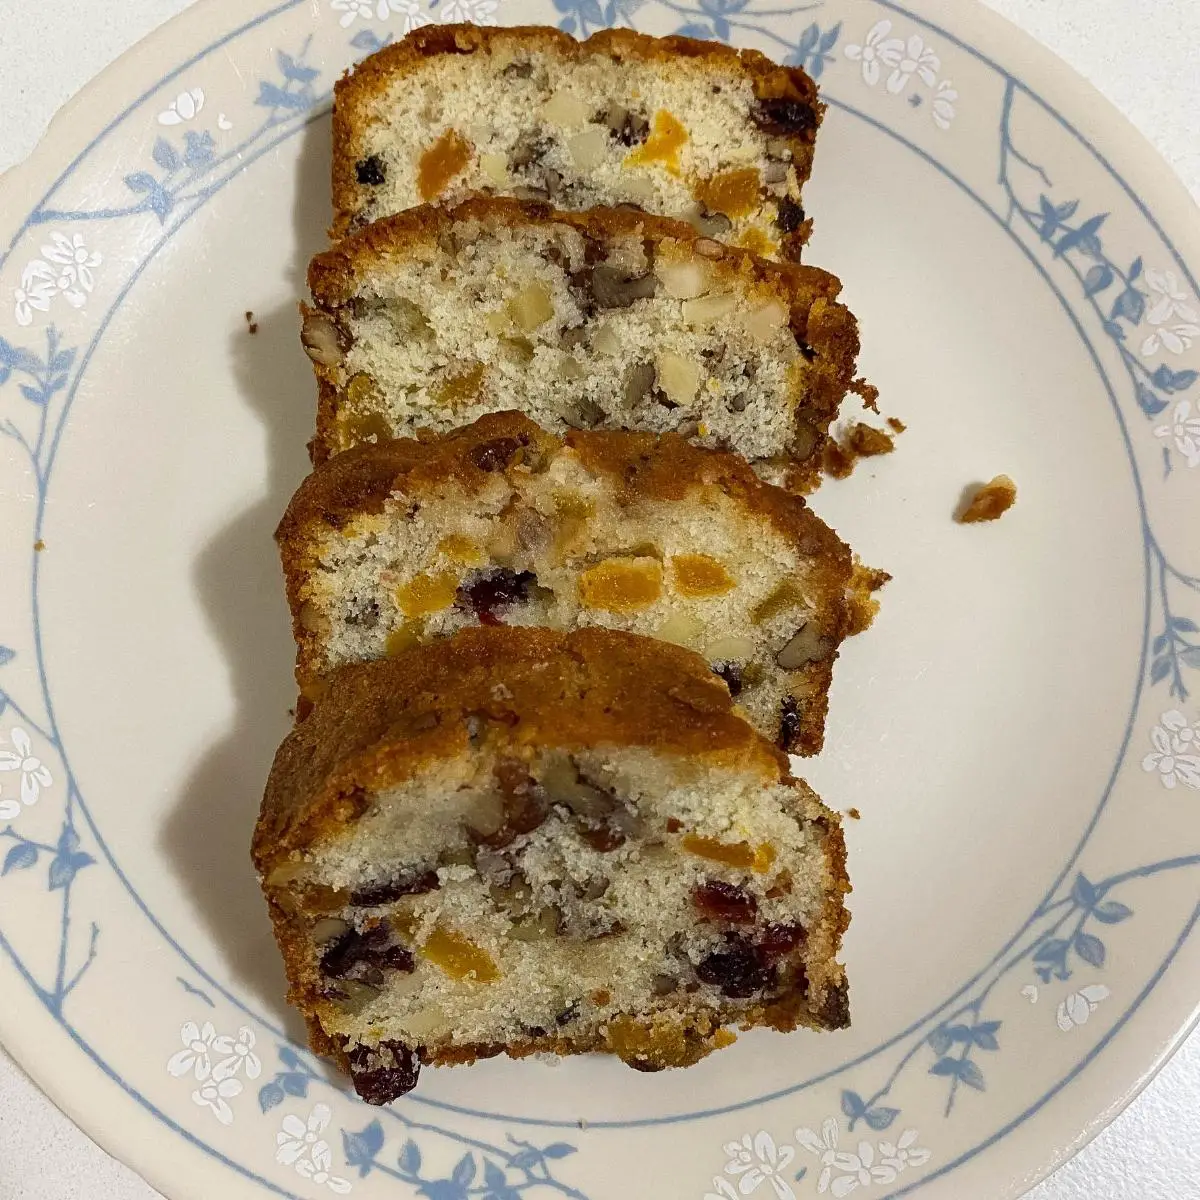 A marzipan fruitcake on the plate.